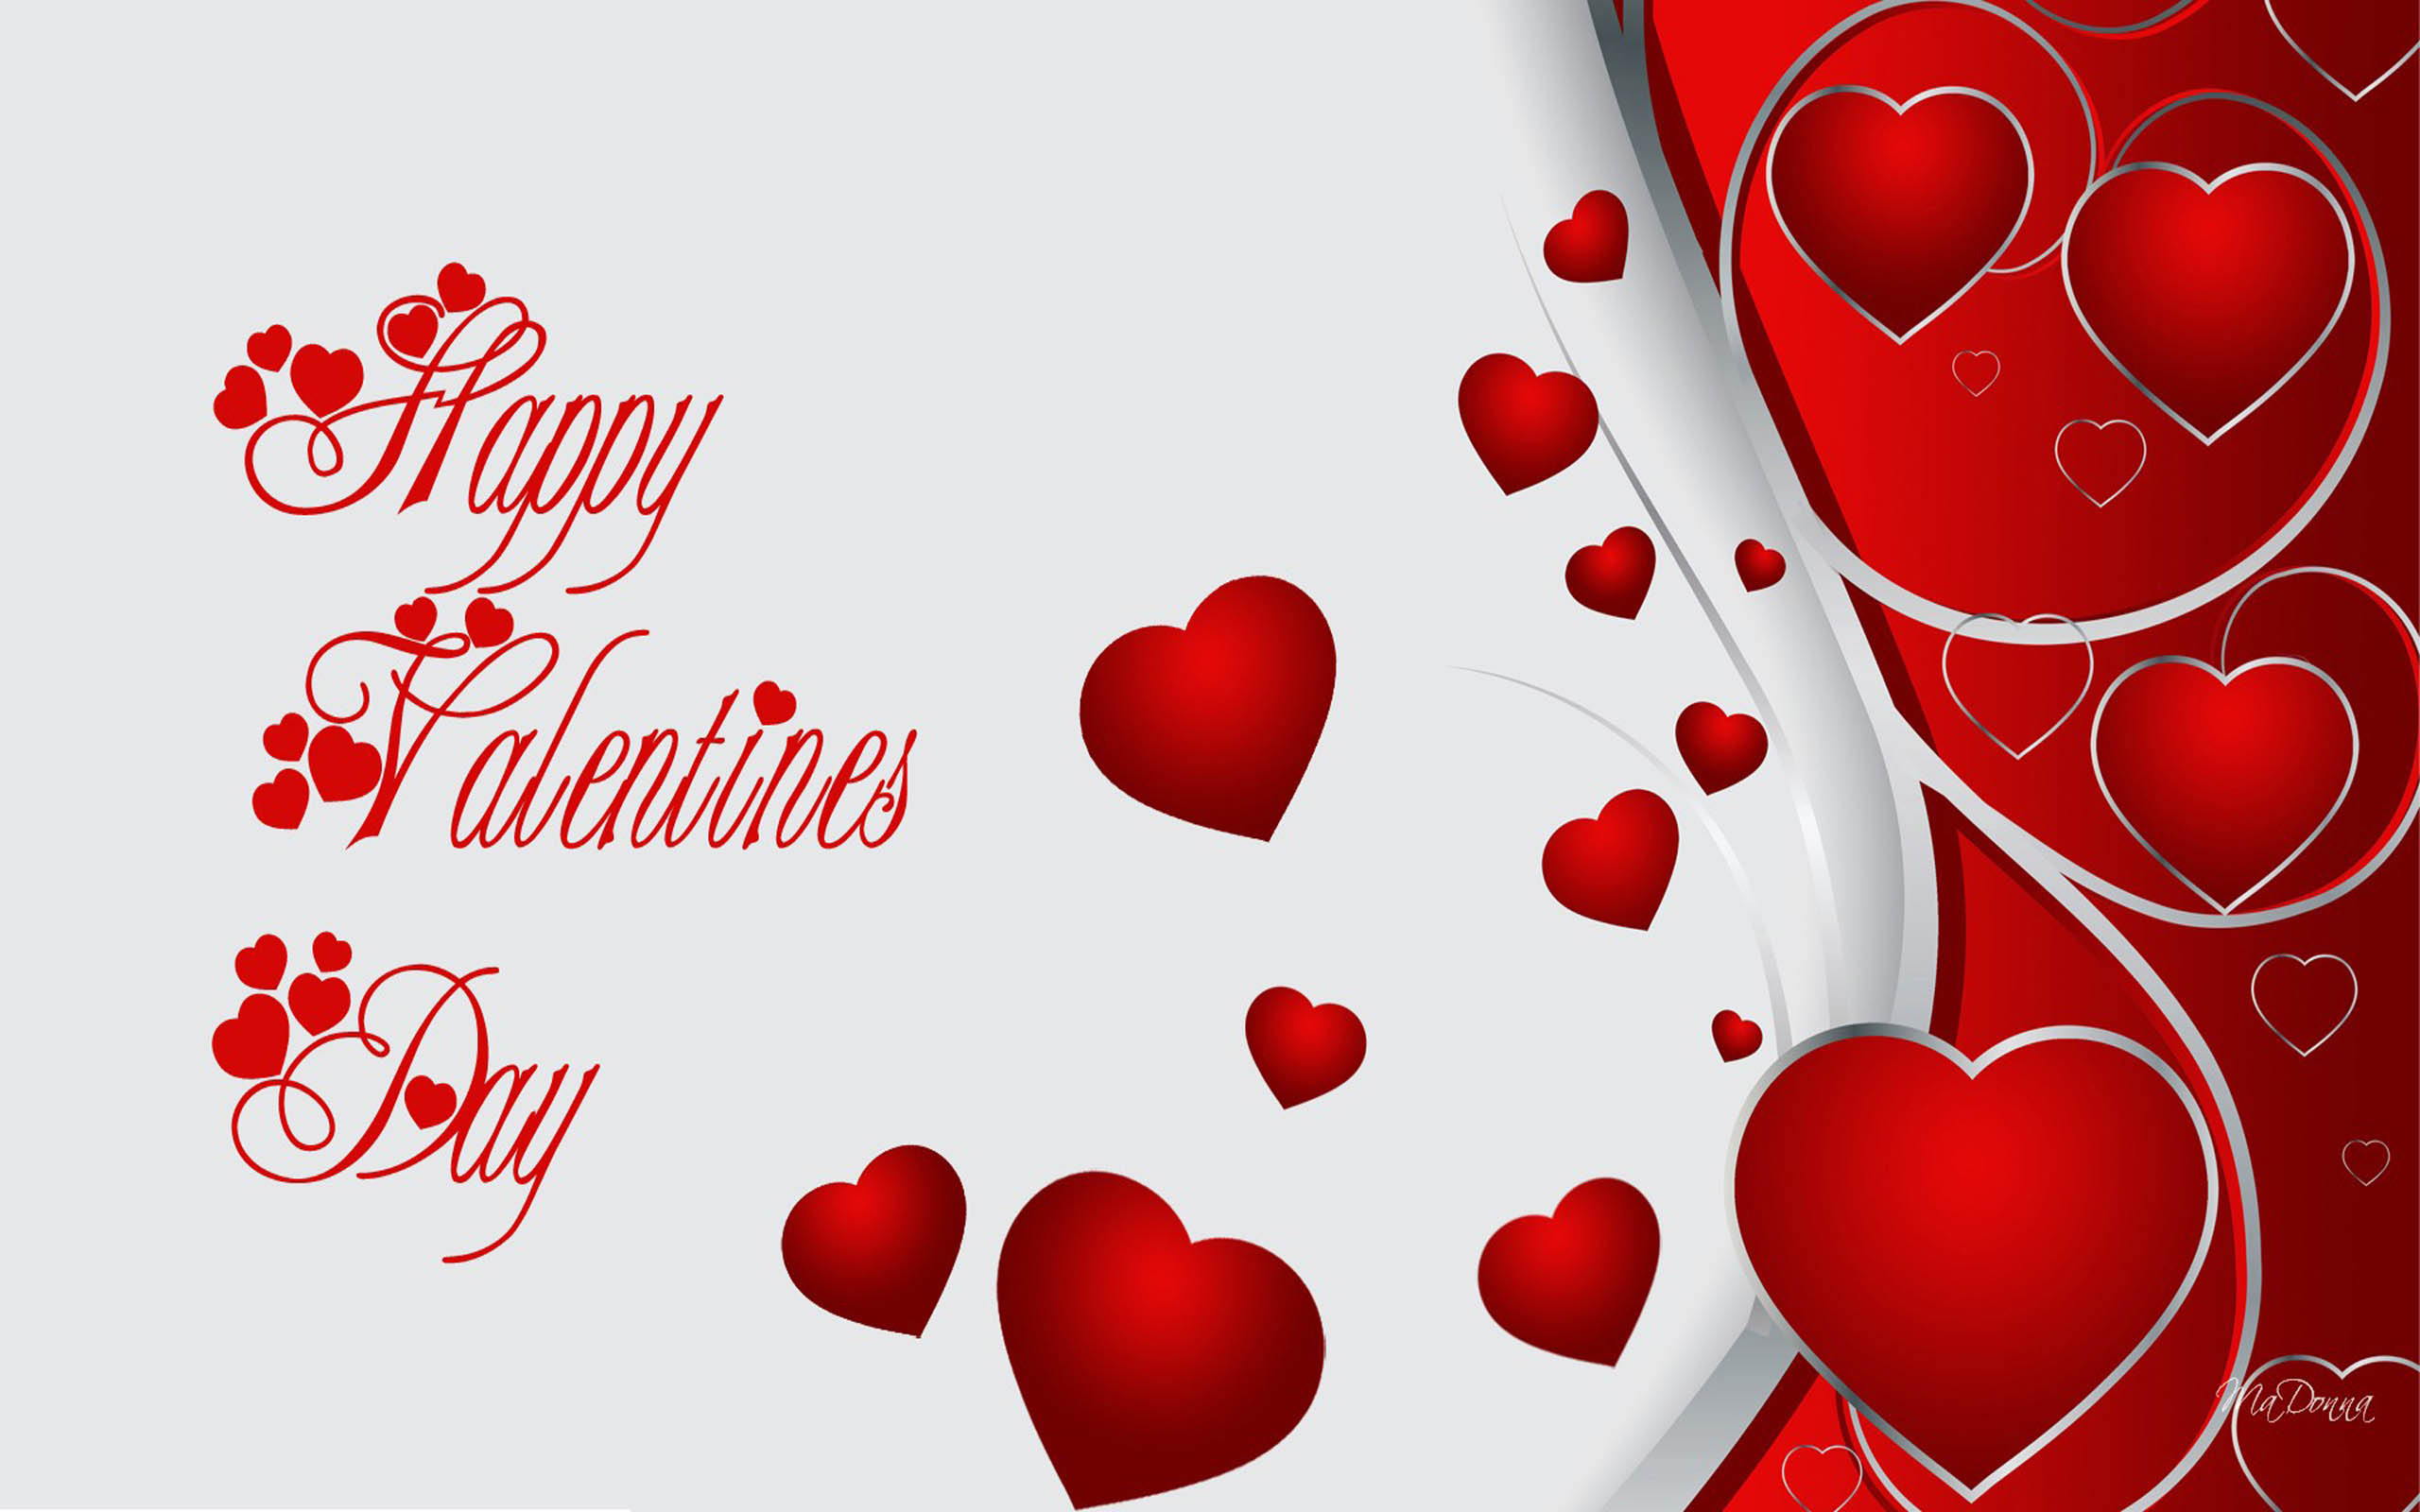 Have a valentine s day. С днем влюбленных. С днем влюбленных картинки. Открытки на 14 февраля.